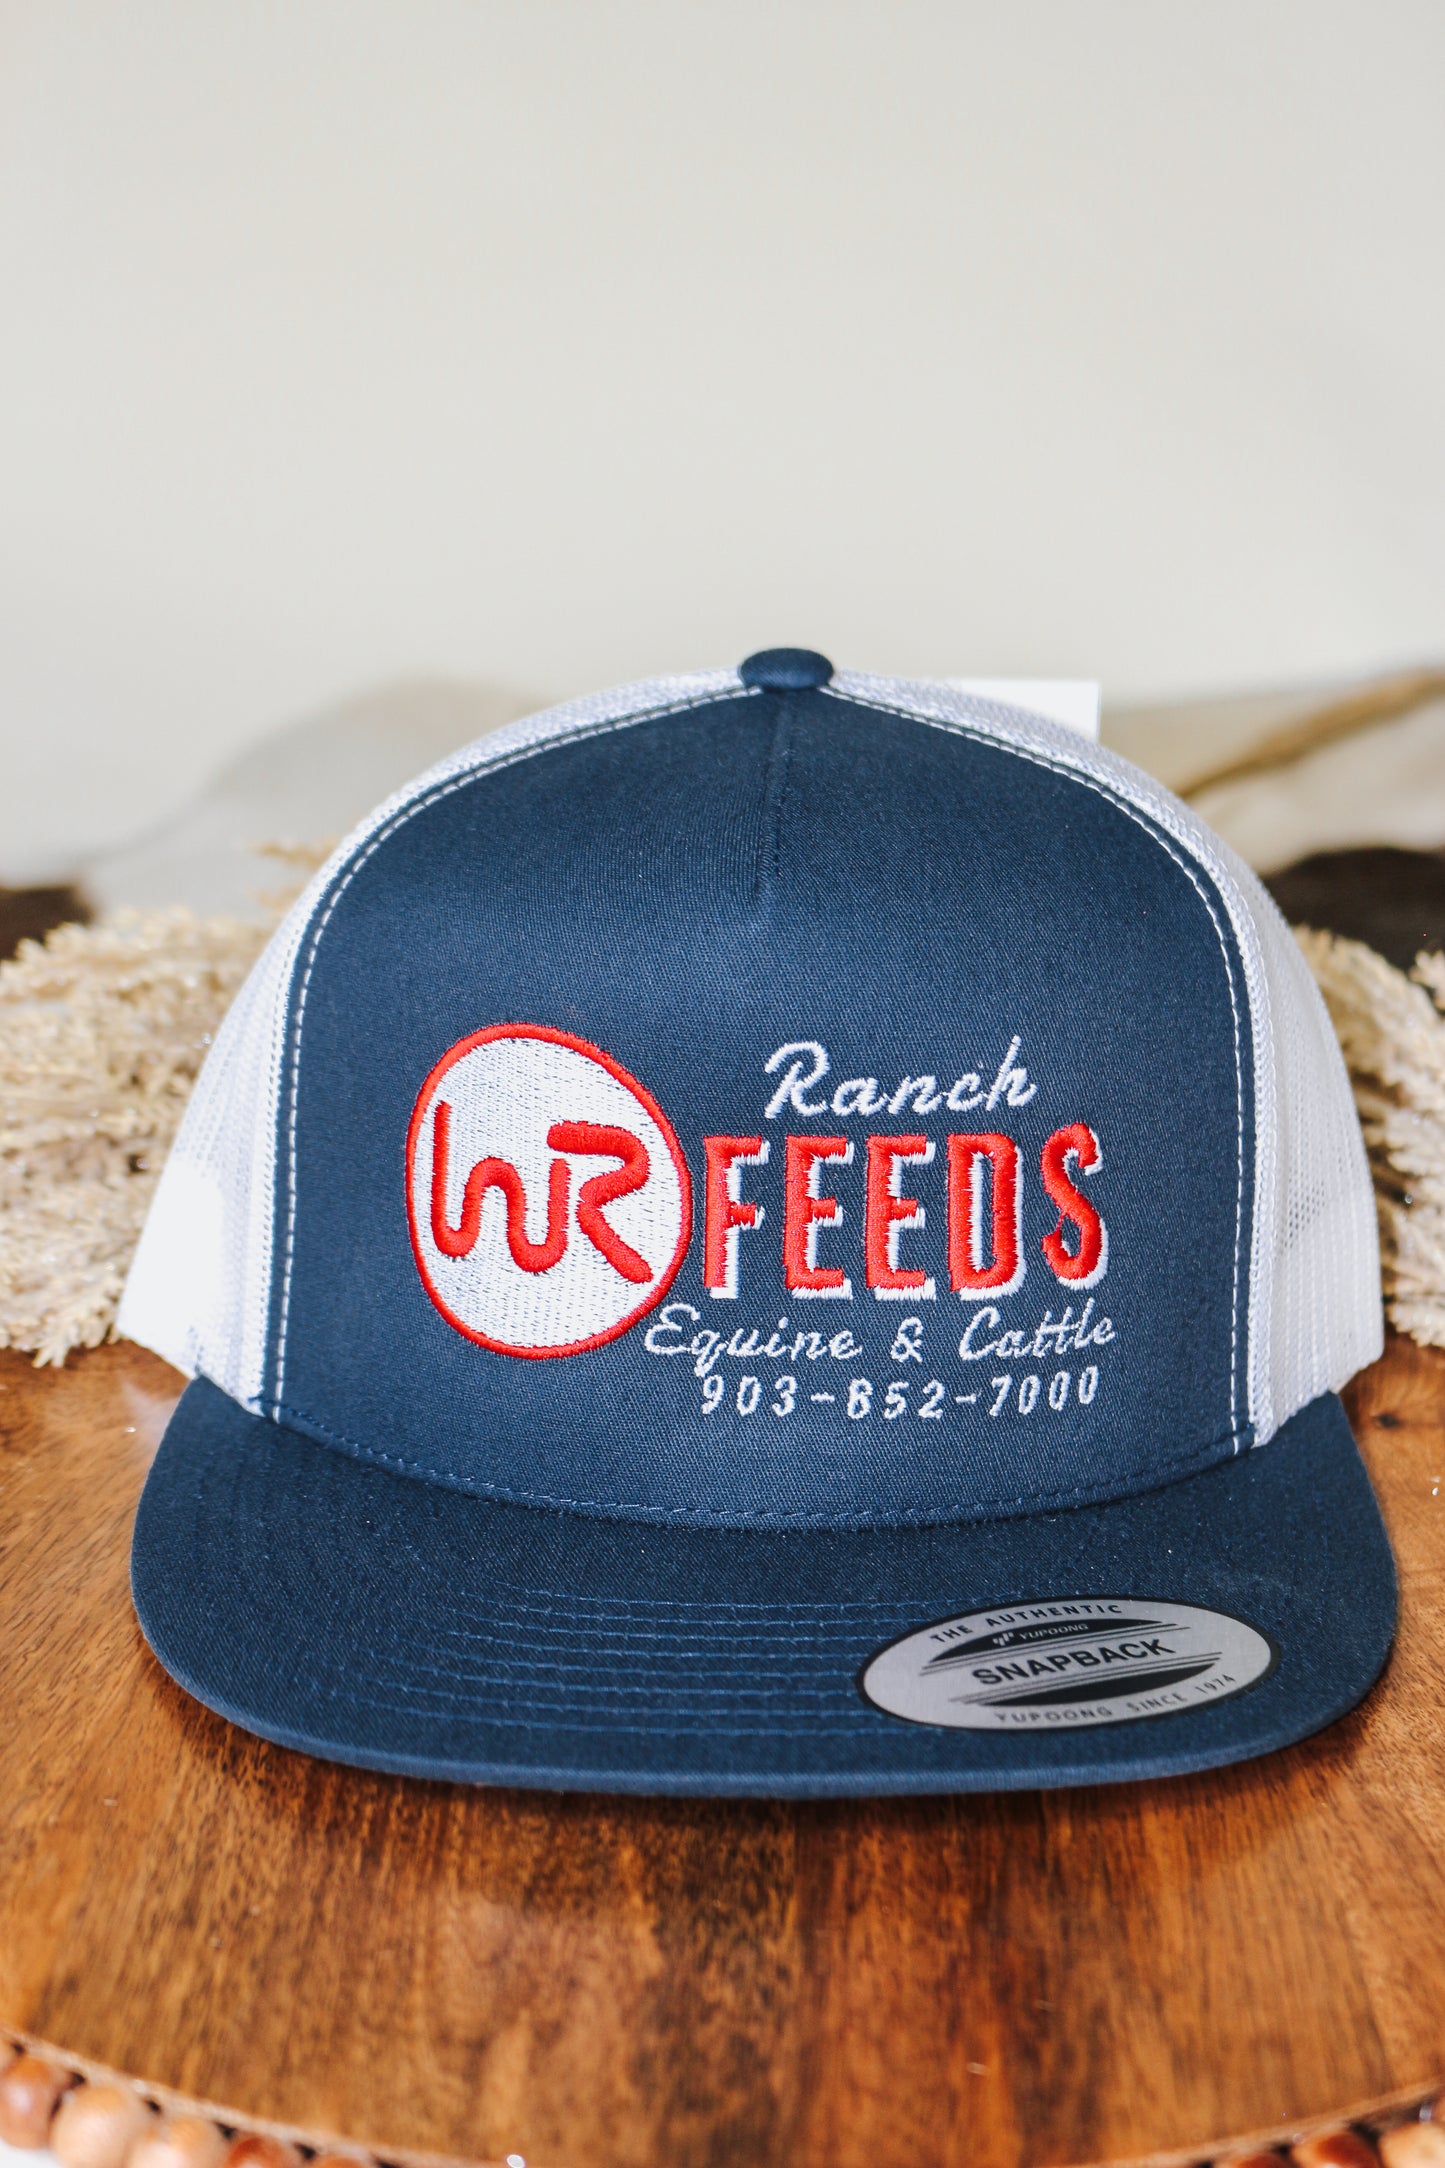 Ranch Feeds Navy & White Cap